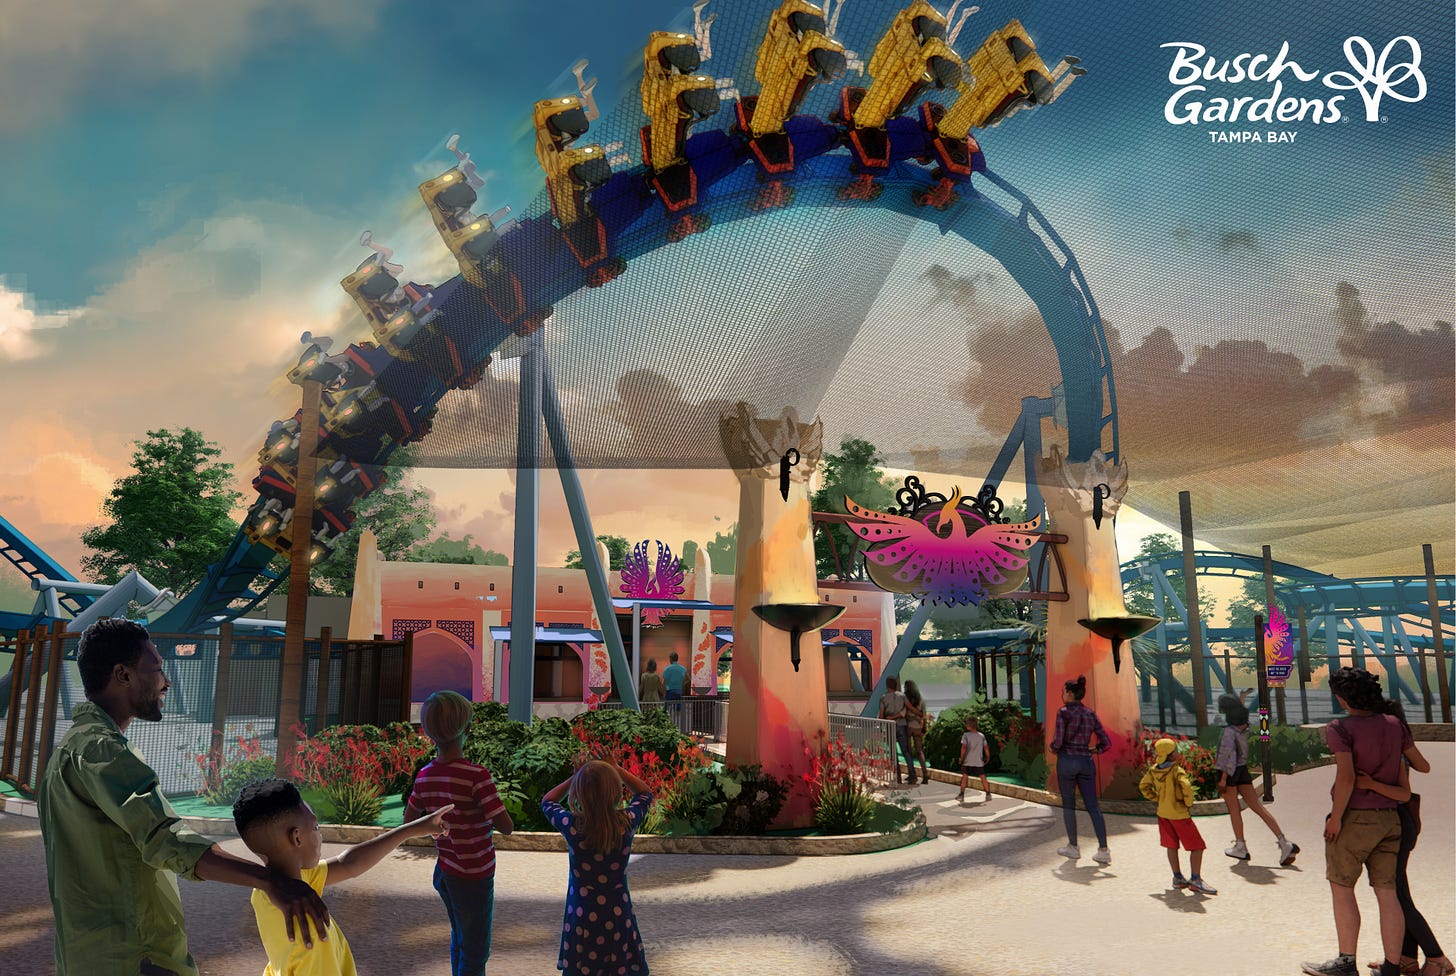 Phoenix Rising coaster at Busch Gardens Tampa rendering